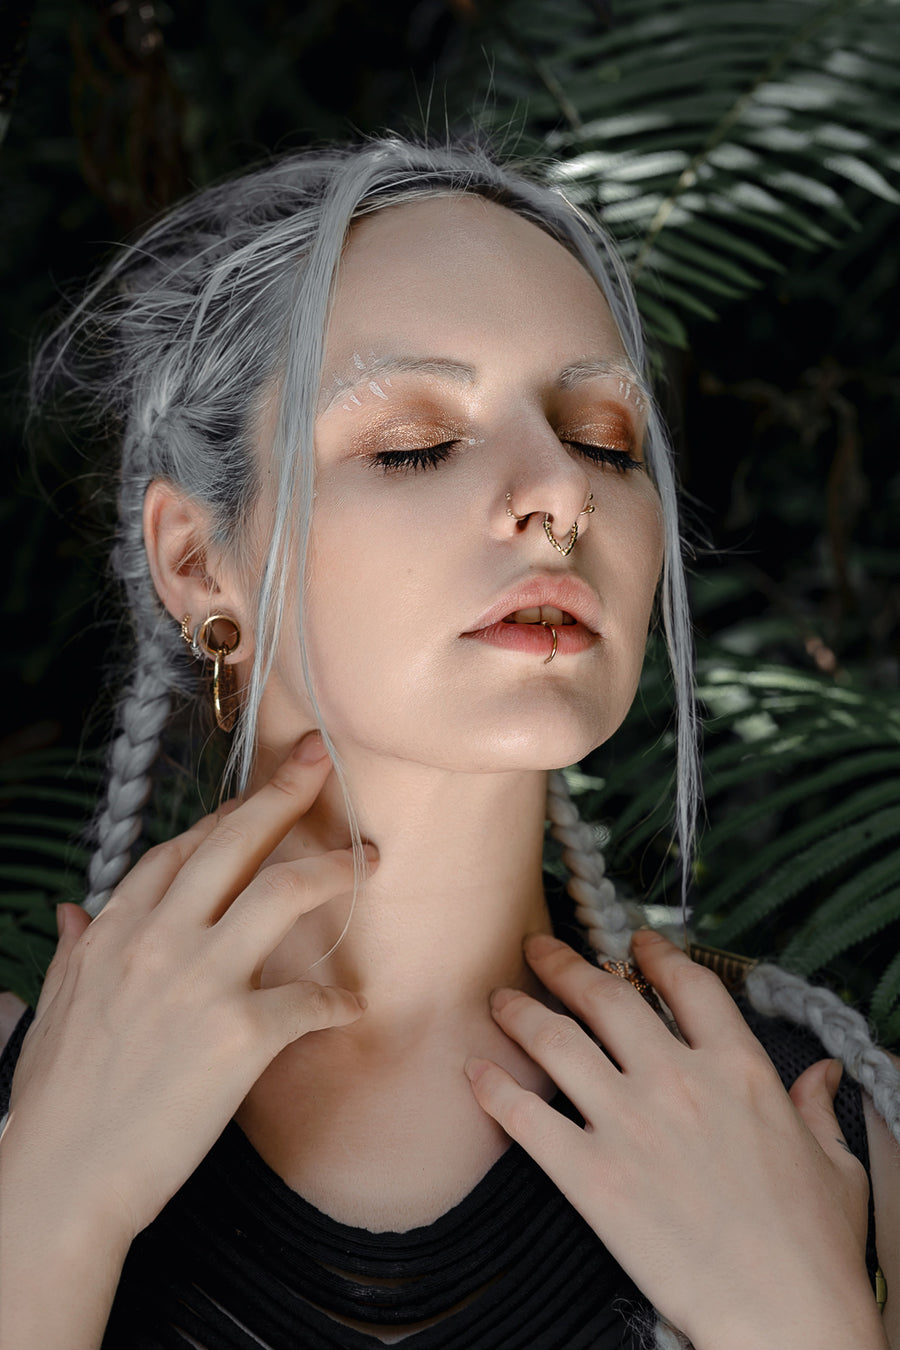 V-shaped septum piercing, alien bio-organic design, platinum blonde hair, leafy backdrop, distinctive statement piece, avant-garde body art.